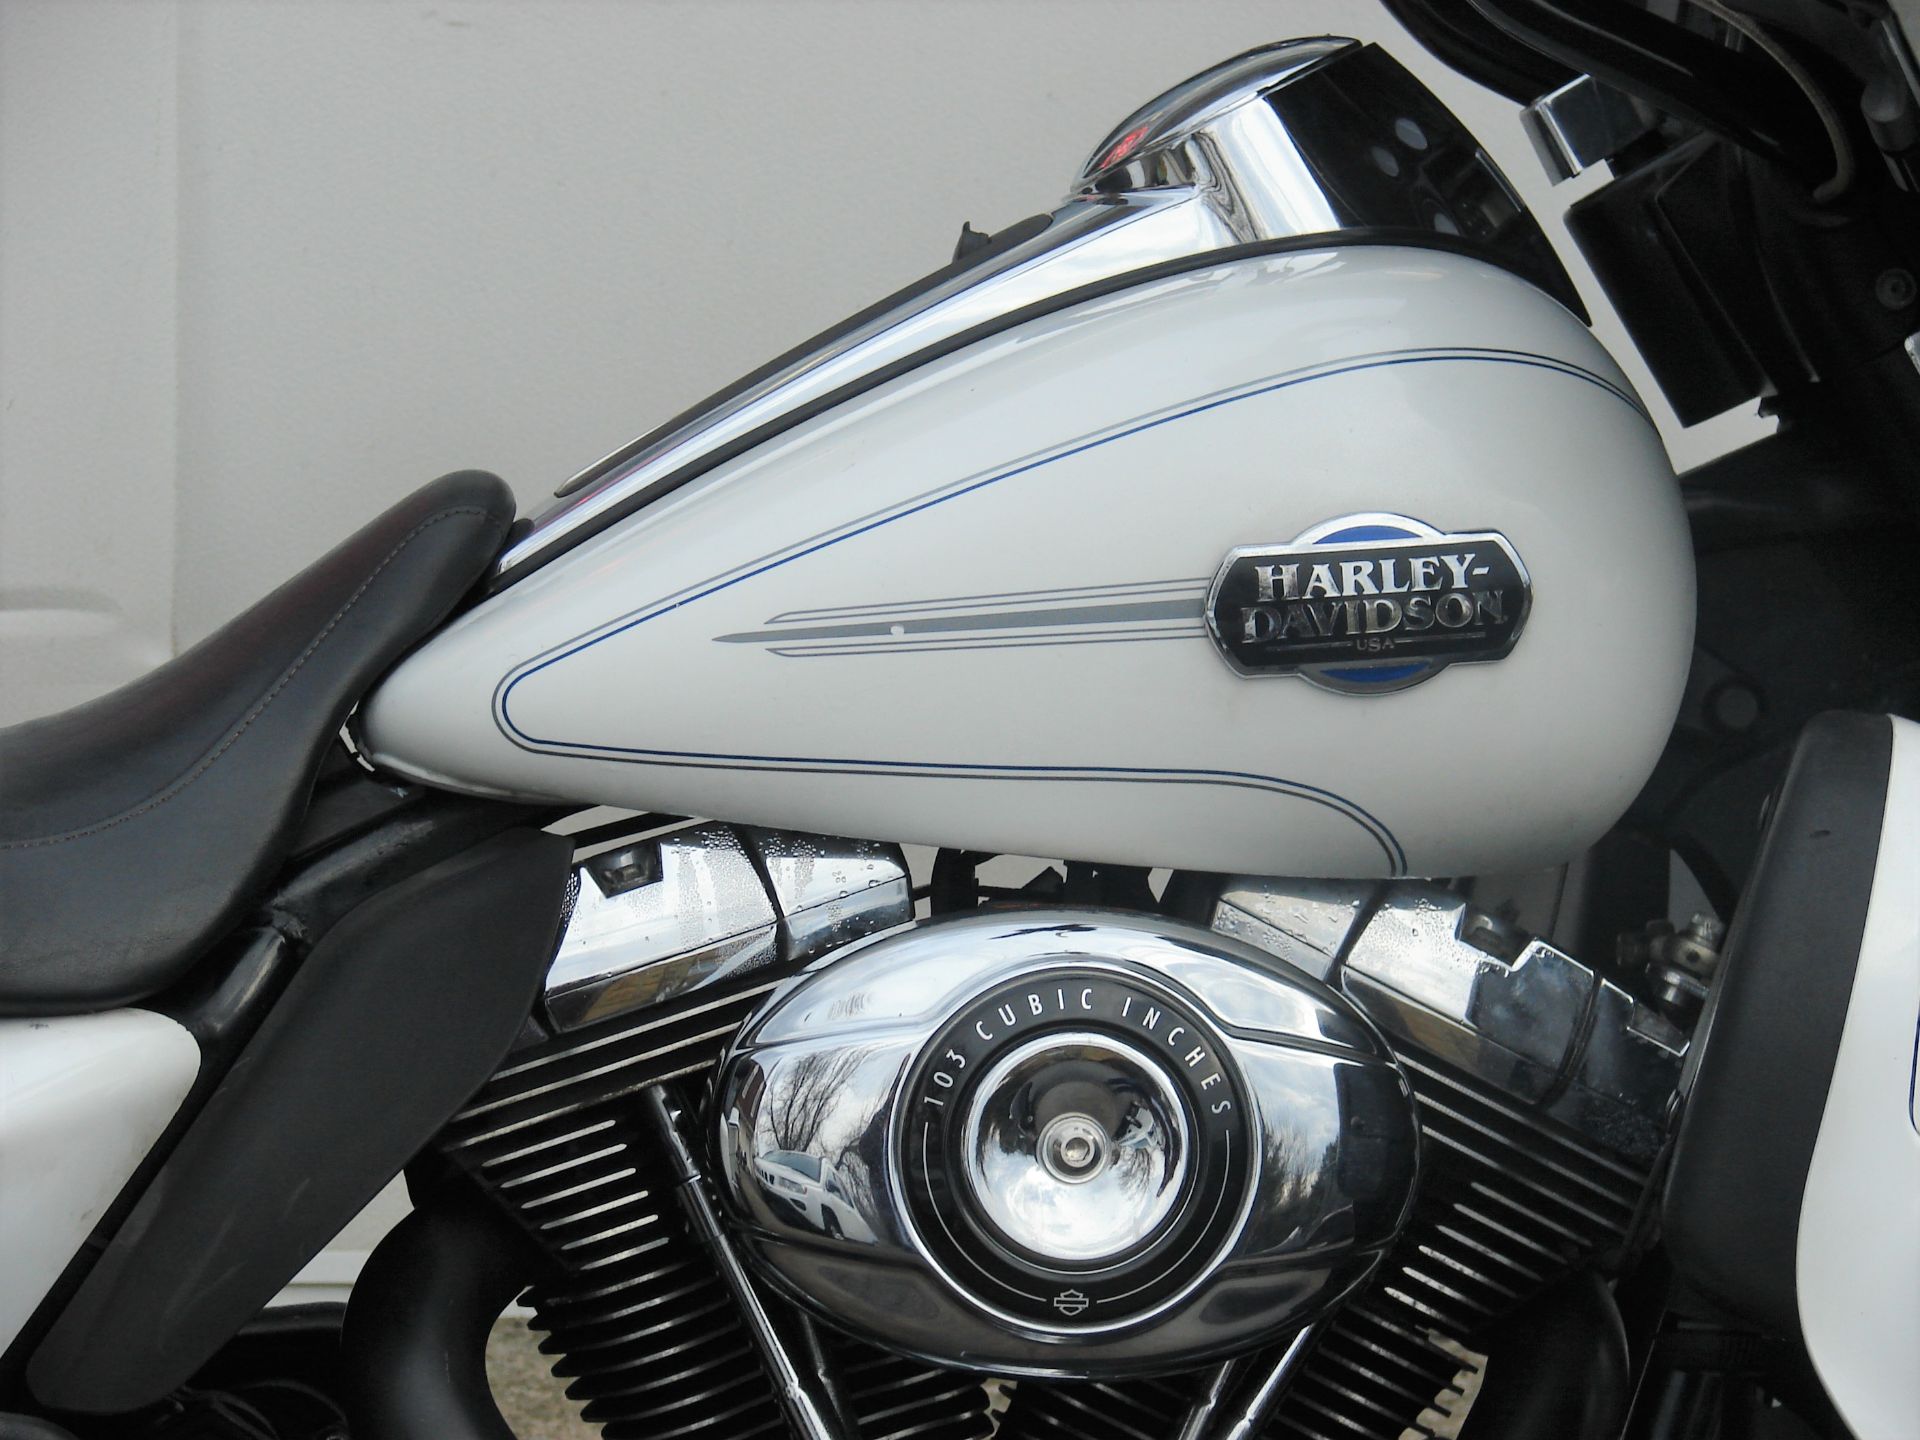 2012 Harley-Davidson FLHTCU Electra Glide Classic in Williamstown, New Jersey - Photo 3